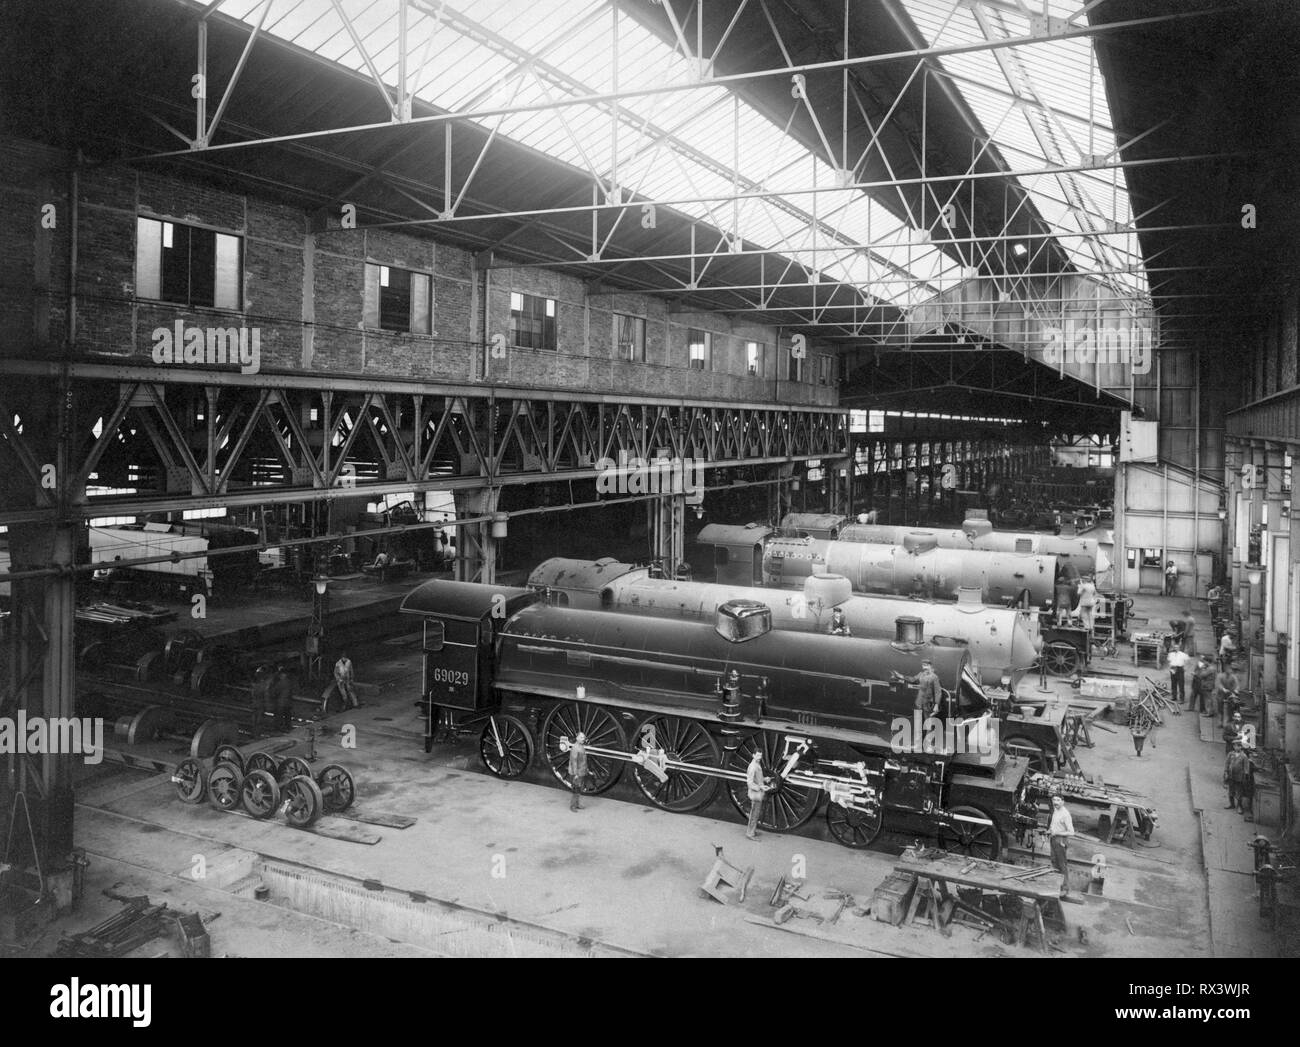 italy, liguria, sampierdarena, ansaldo, steam locomotives 1800-1900 Stock Photo